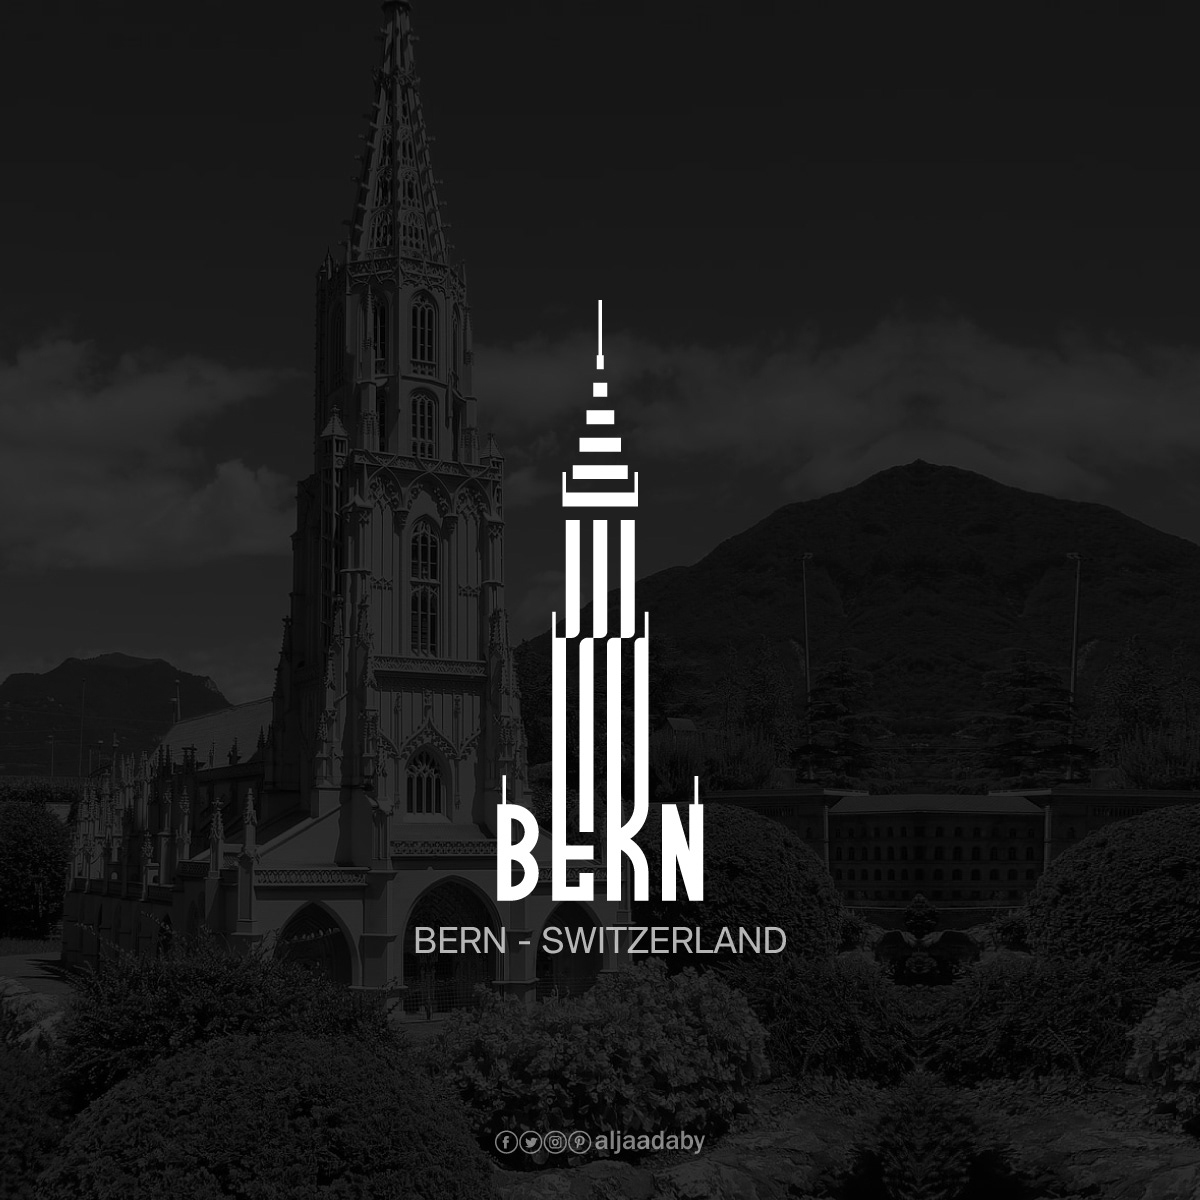 Typographic city logos based on their famous landmarks - Bern